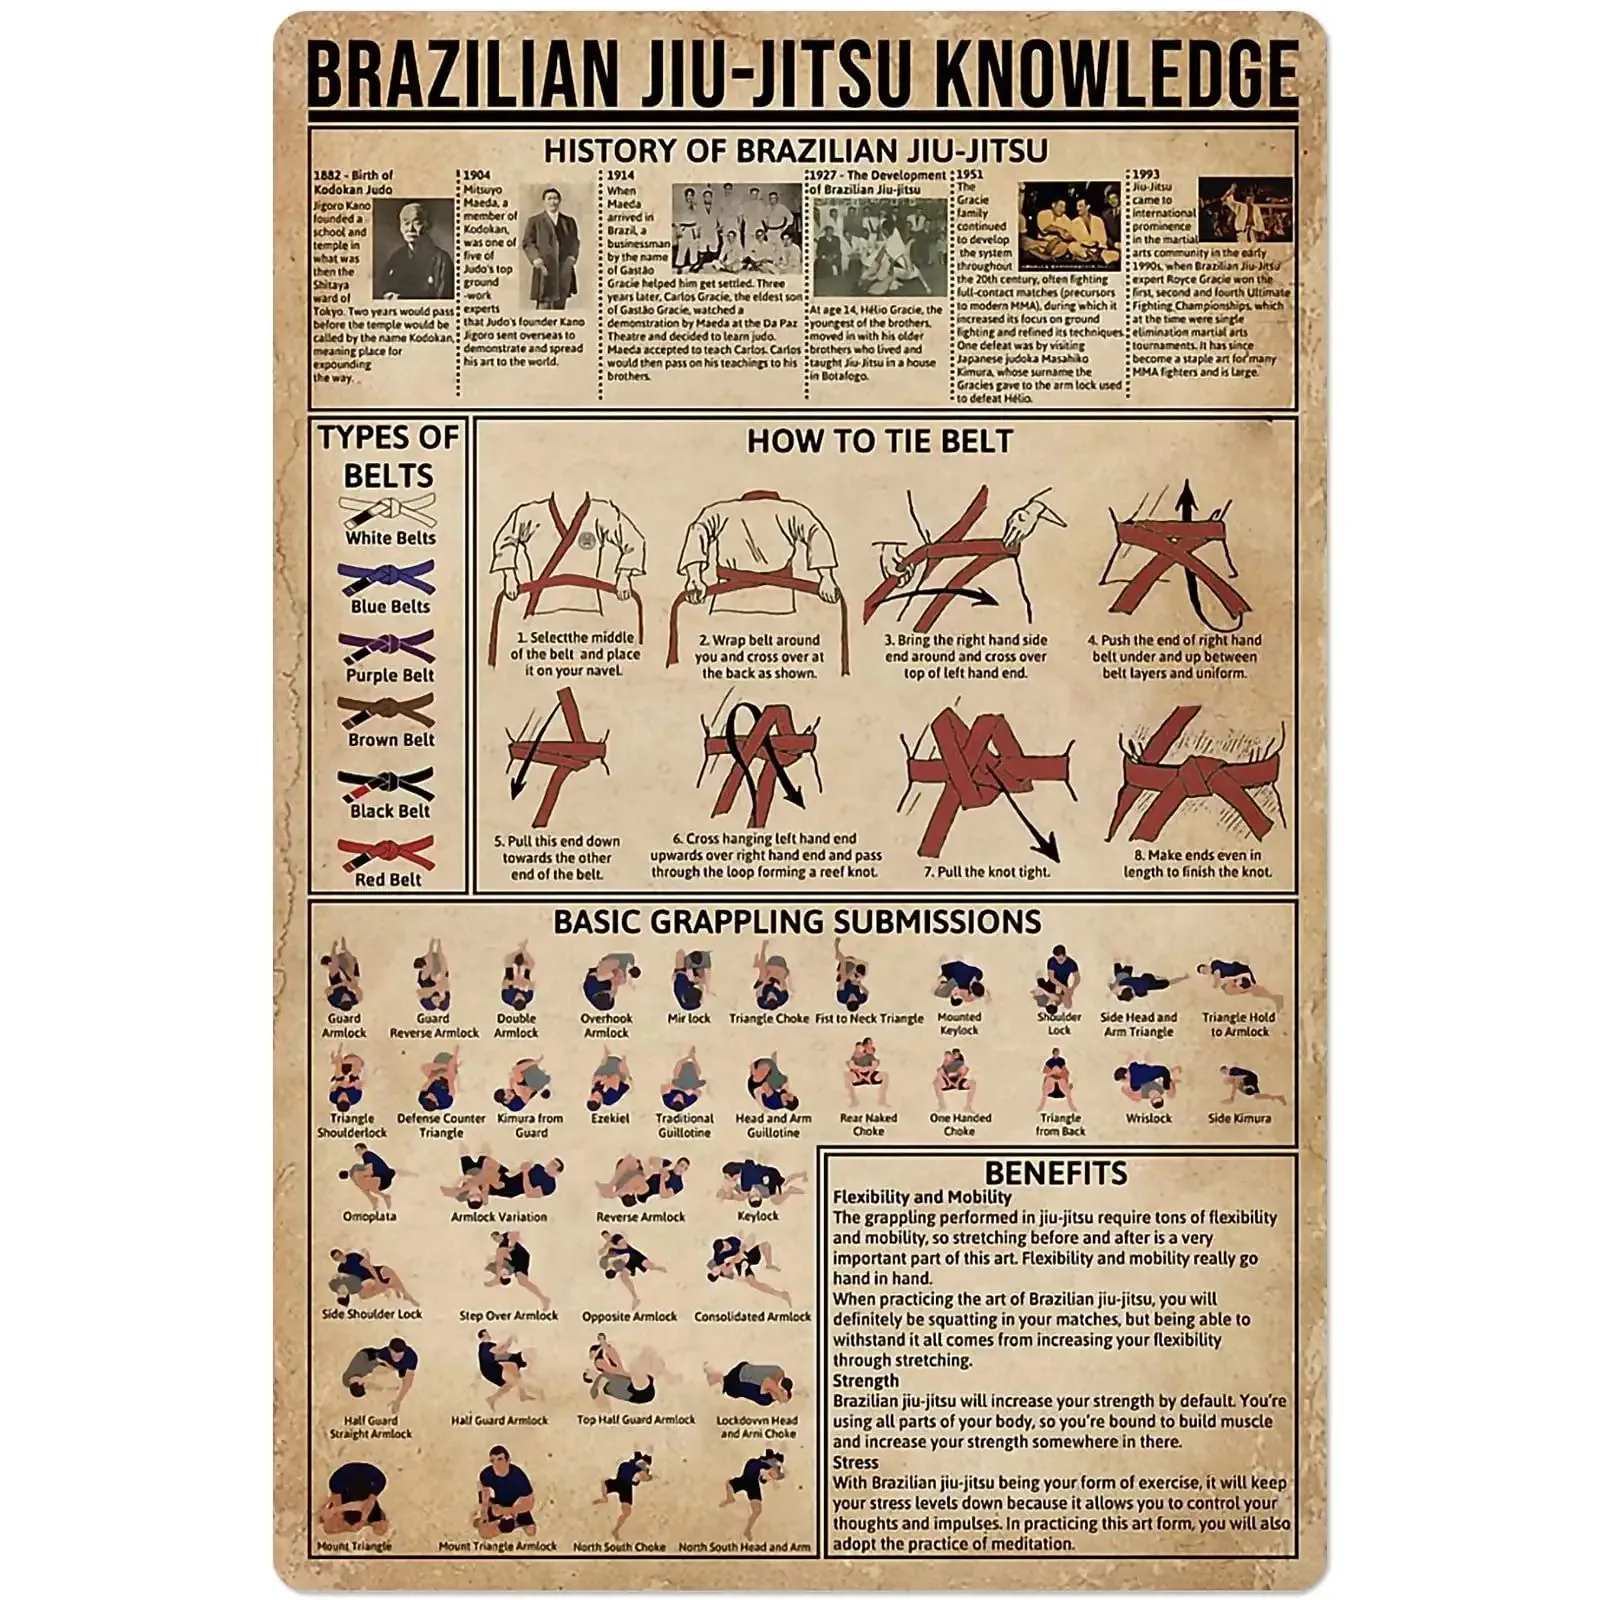 

Ji-Jitsu Knowledge Metal Tin Sign Brazilian Jiu-Jitsu Education Guide Poster Martial Arts Hall Club School Home Wall Decoration